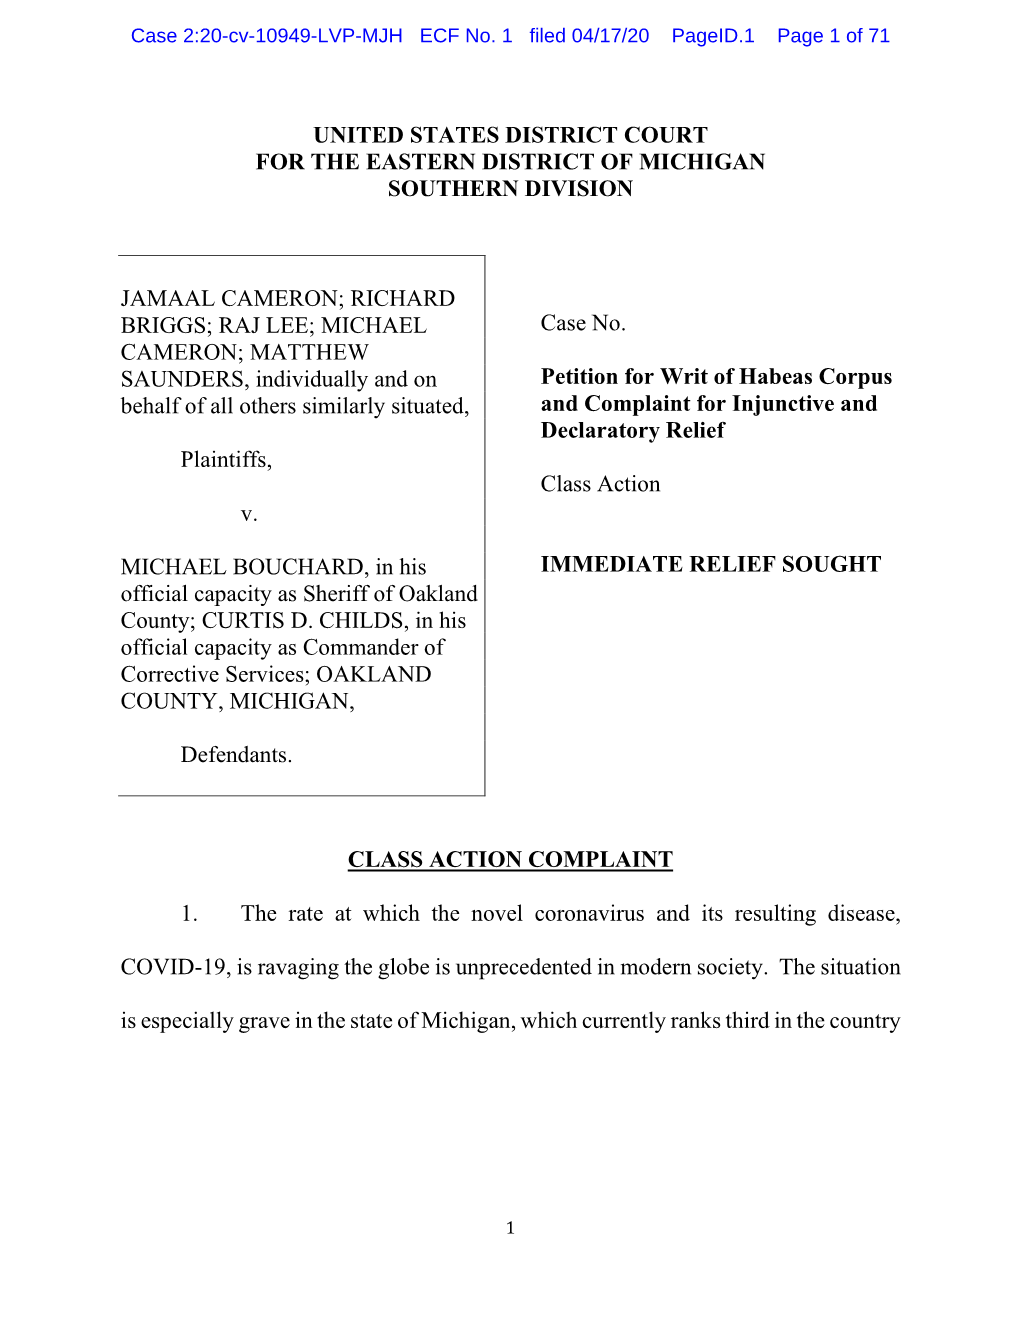 Case 2:20-Cv-10949-LVP-MJH ECF No. 1 Filed 04/17/20 Pageid.1 Page 1 of 71